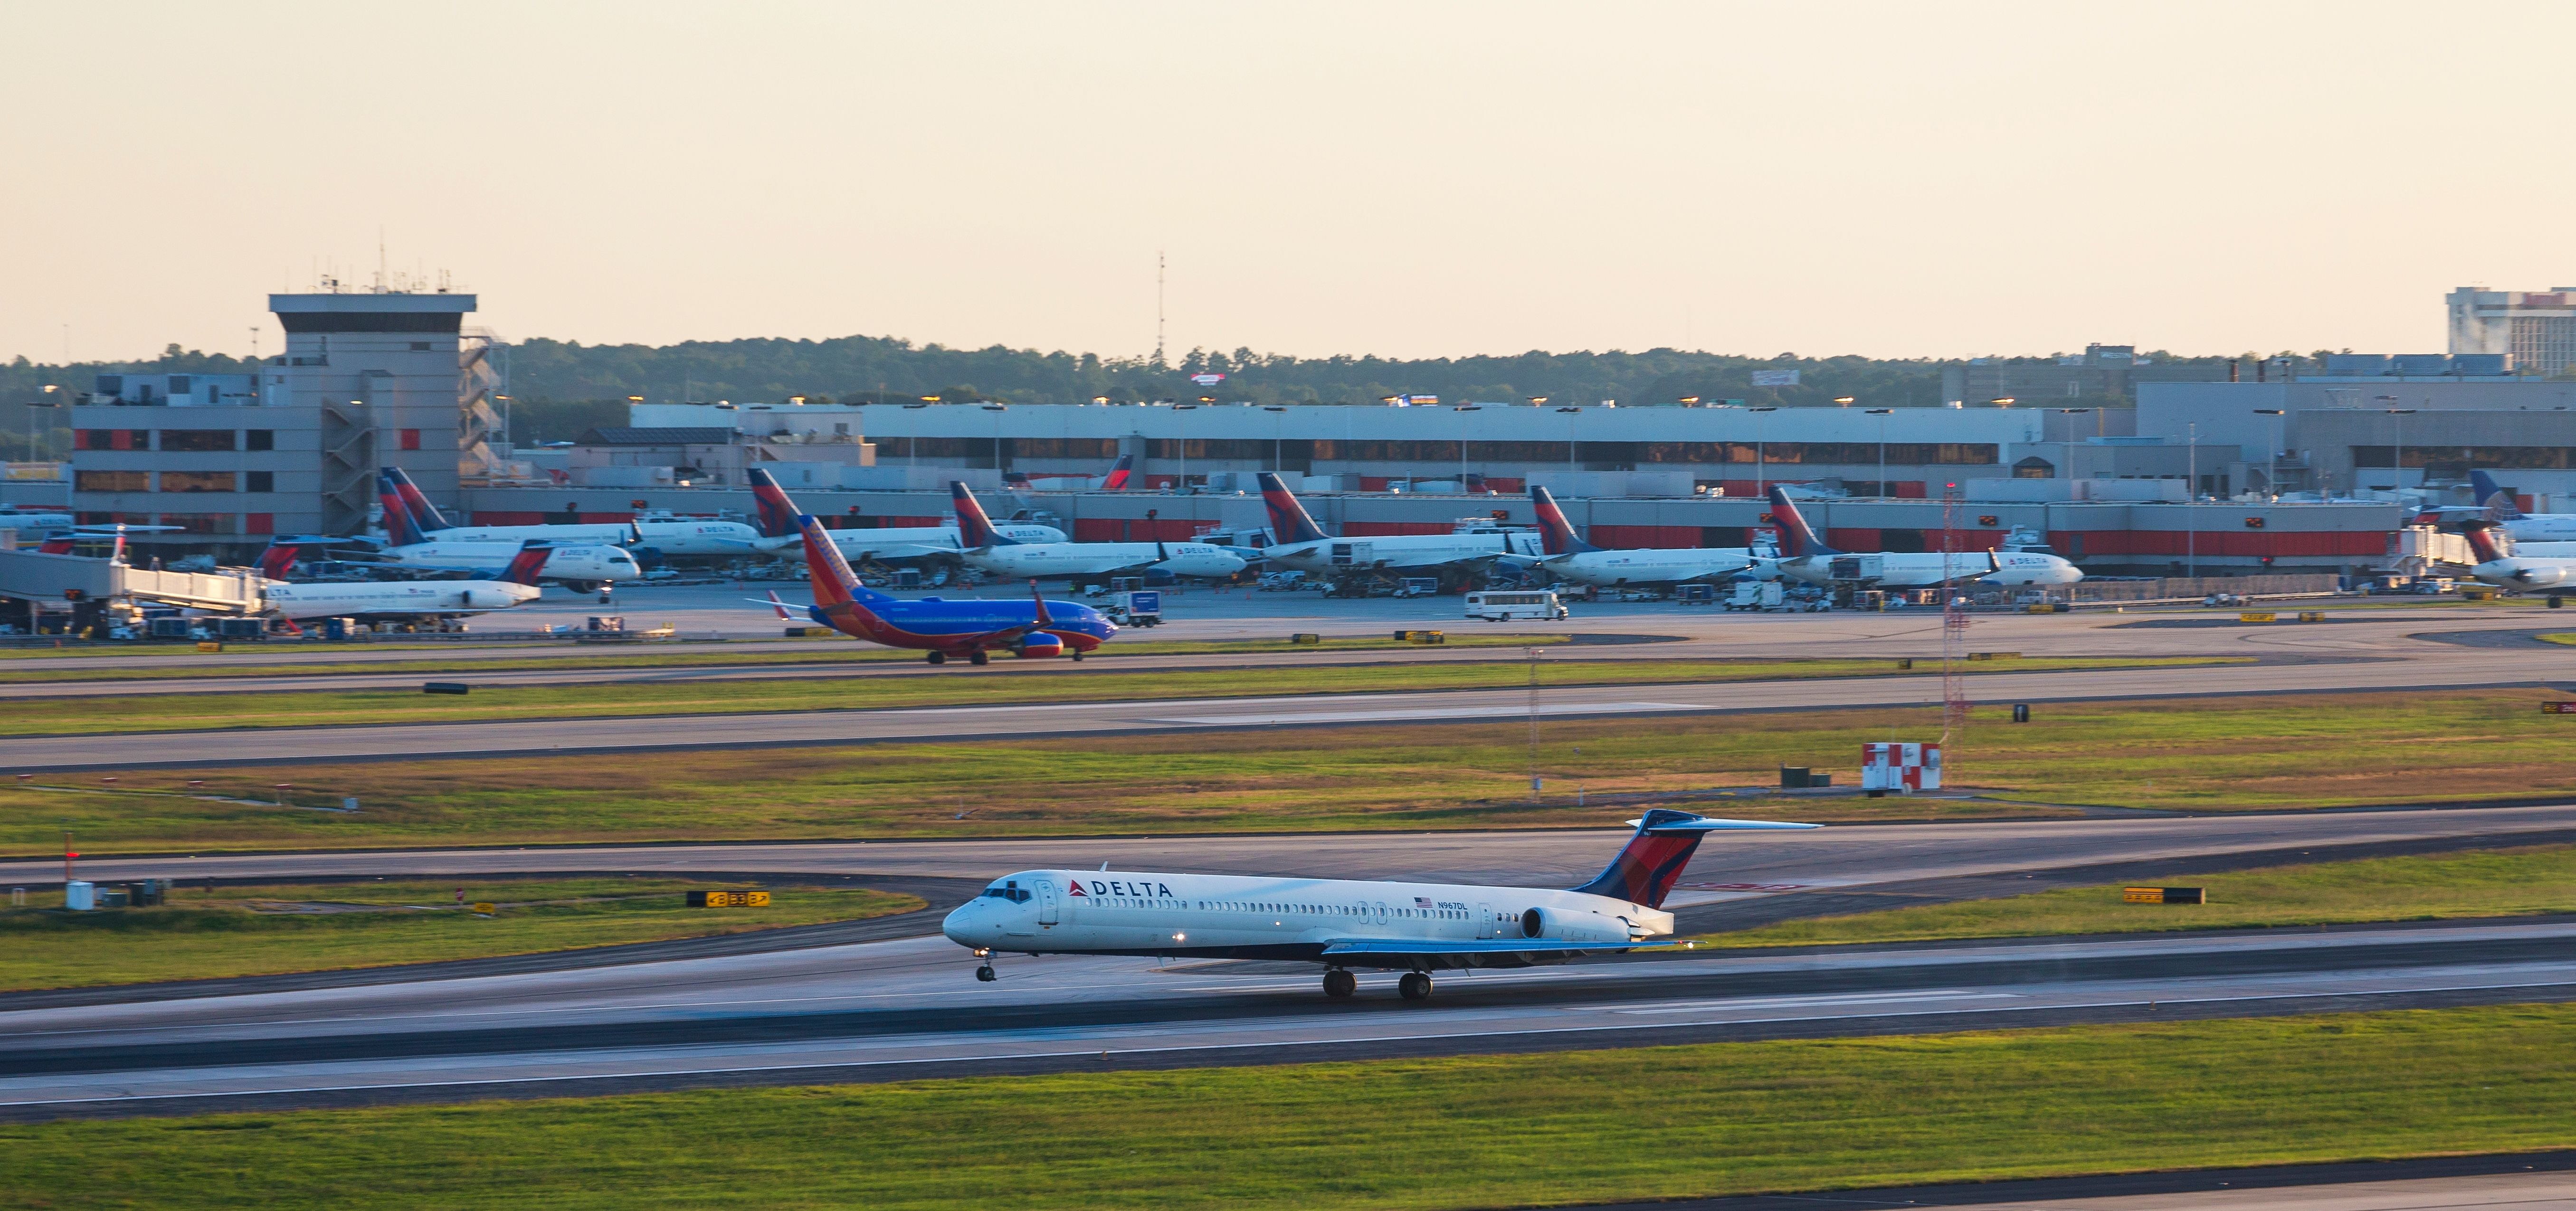 A Delta Air Lines plane takes off from Atlanta (ATL)